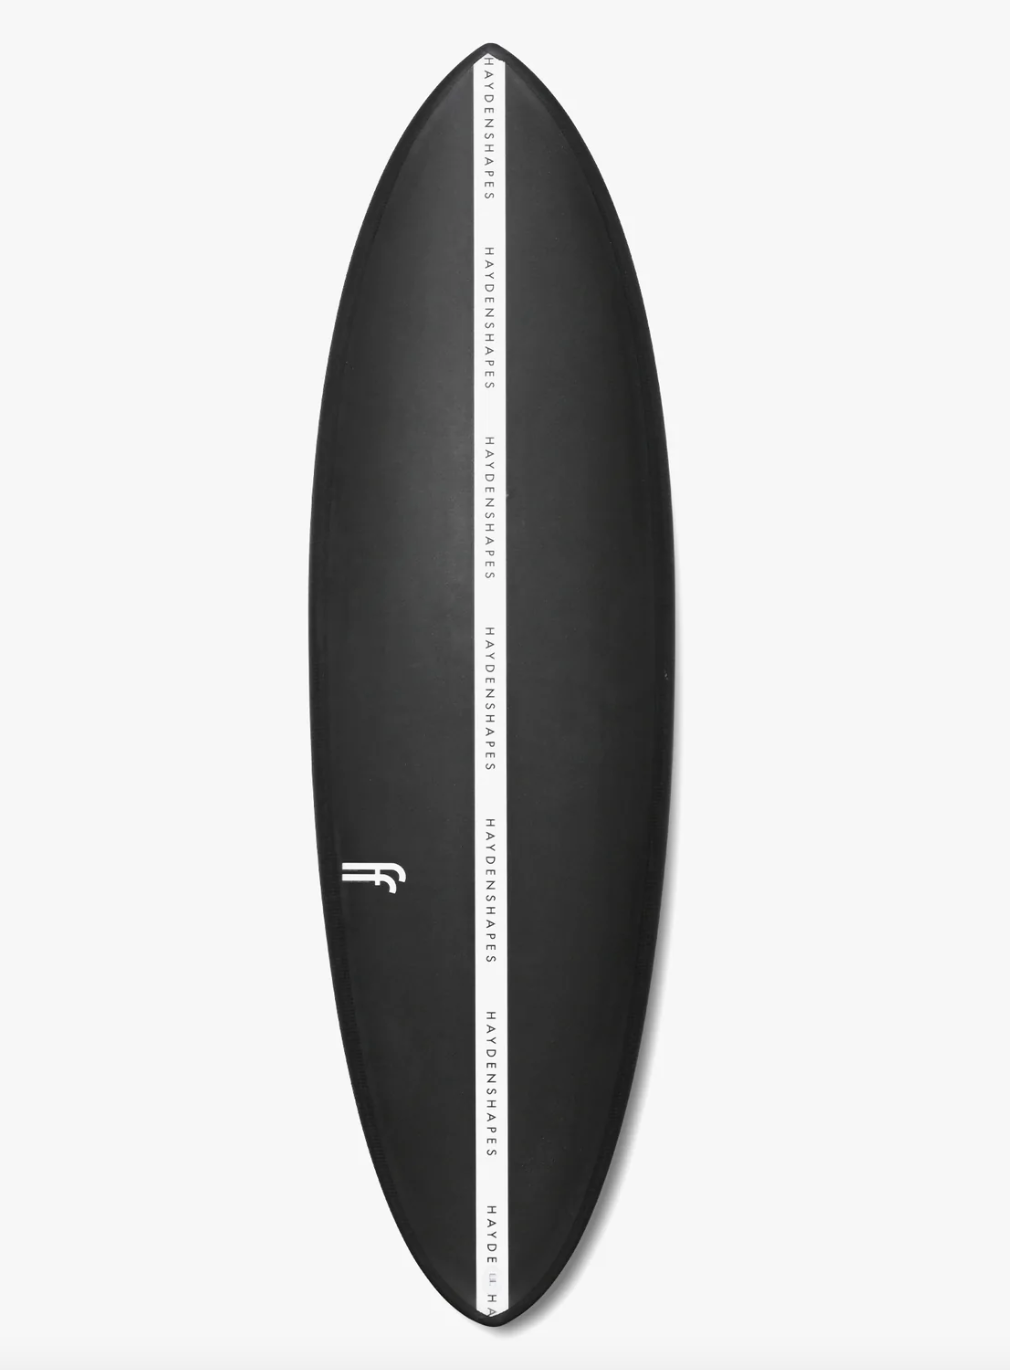 Hypto Kypto Futureflex - Haydenshapes Surfboard - 5'11" (In store pick-up only)